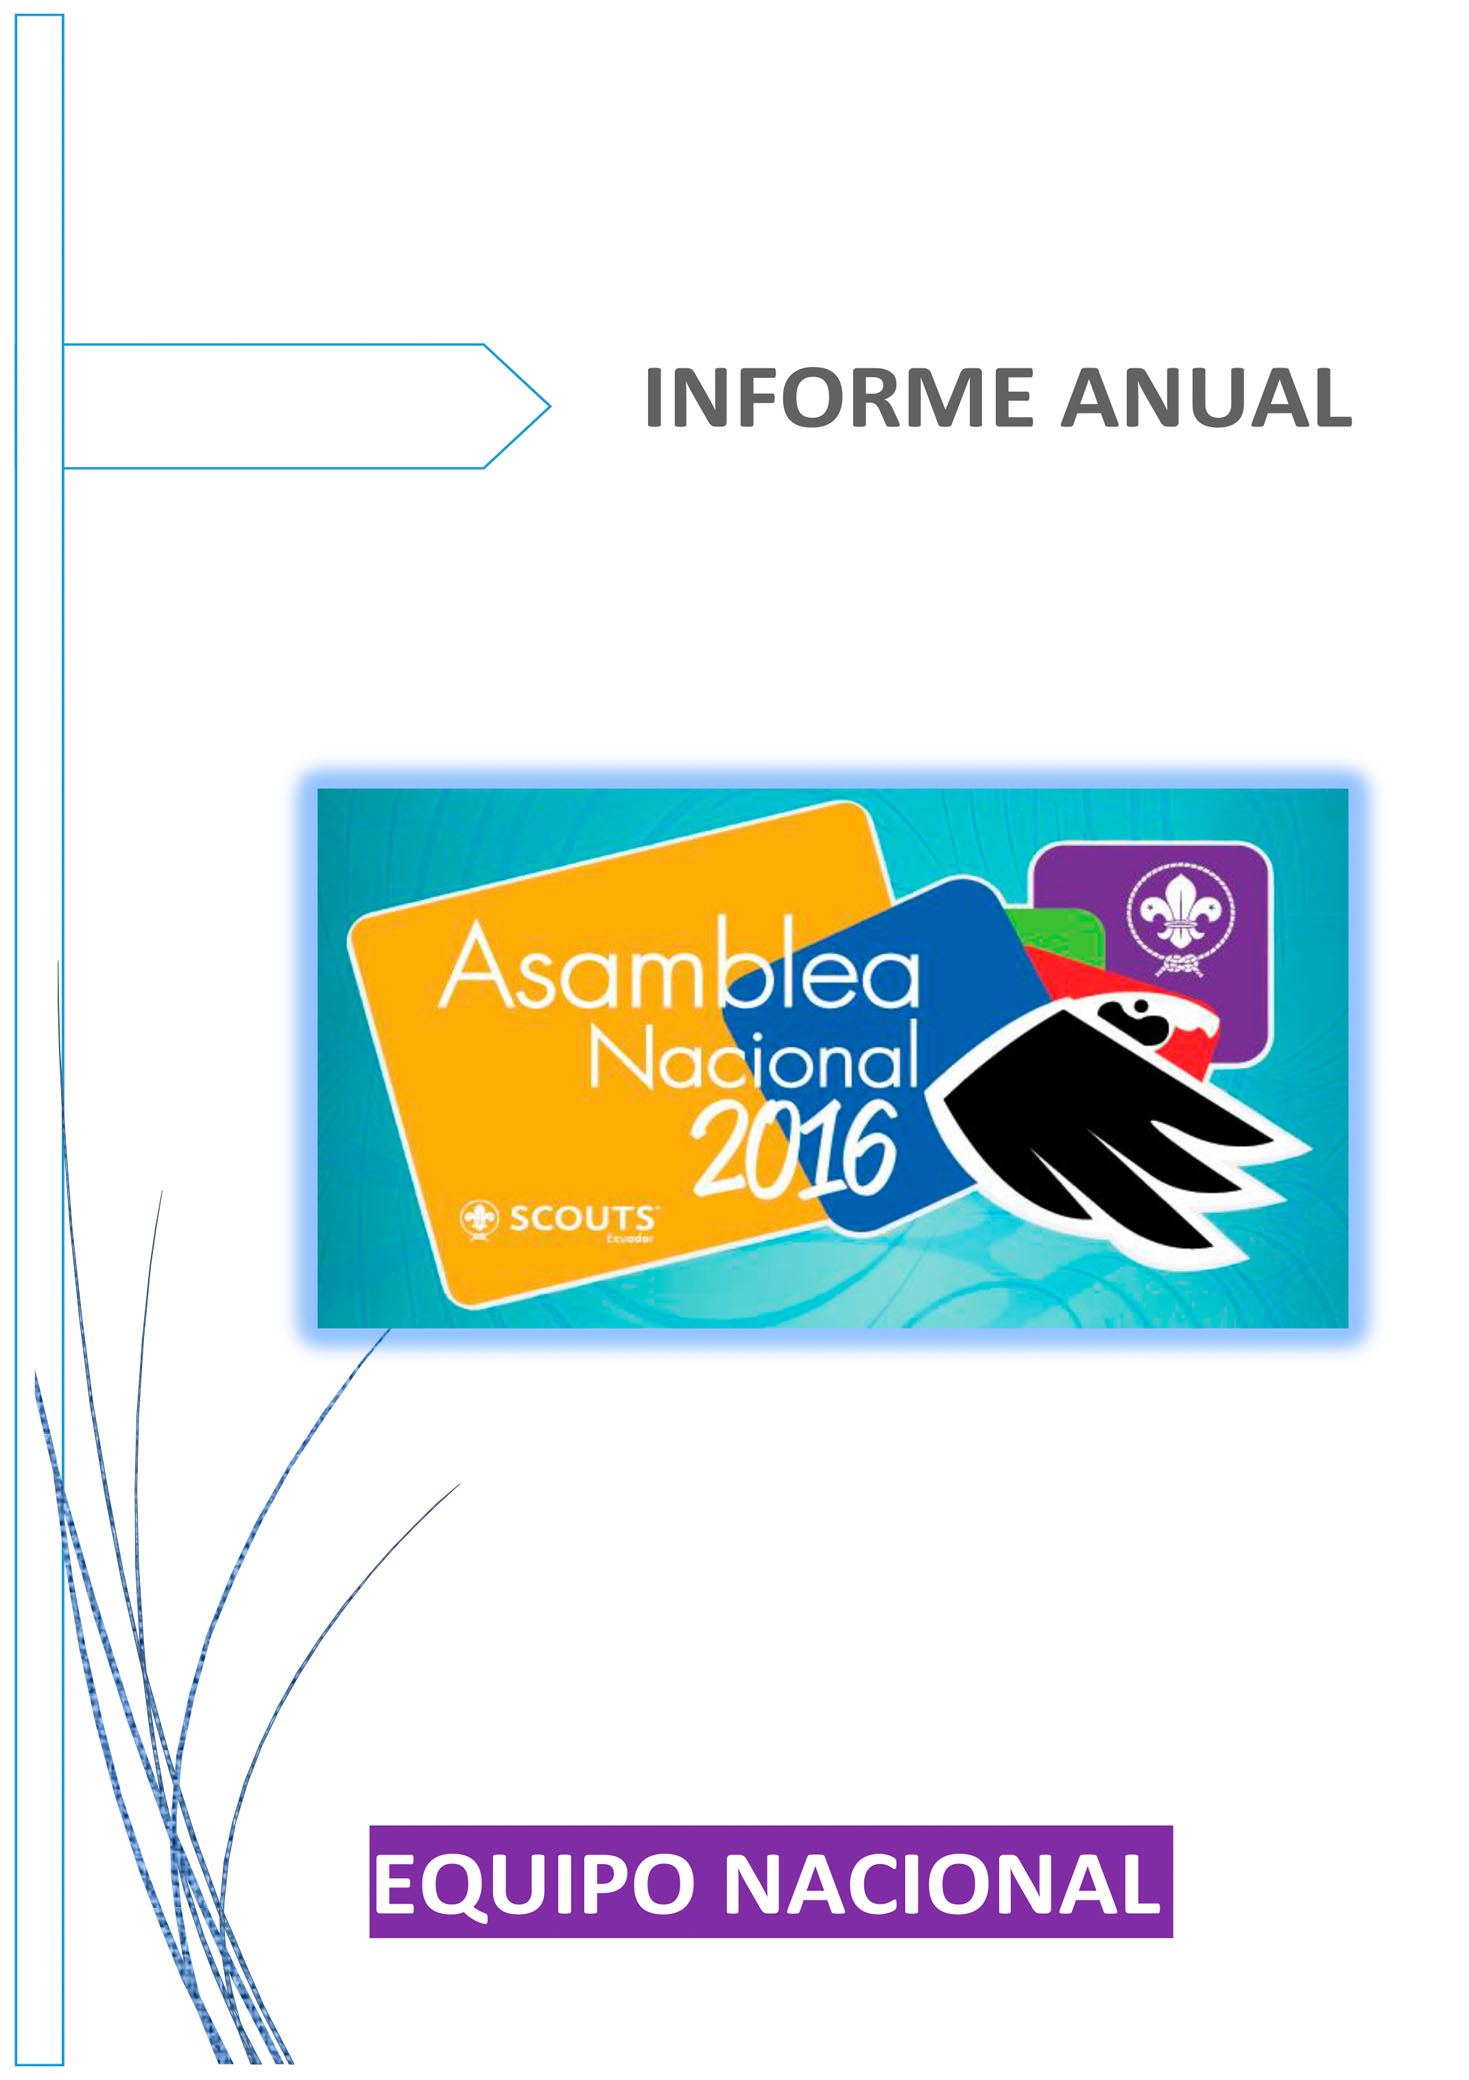 Informe Equipo Nacional Asamblea Nacional 2016